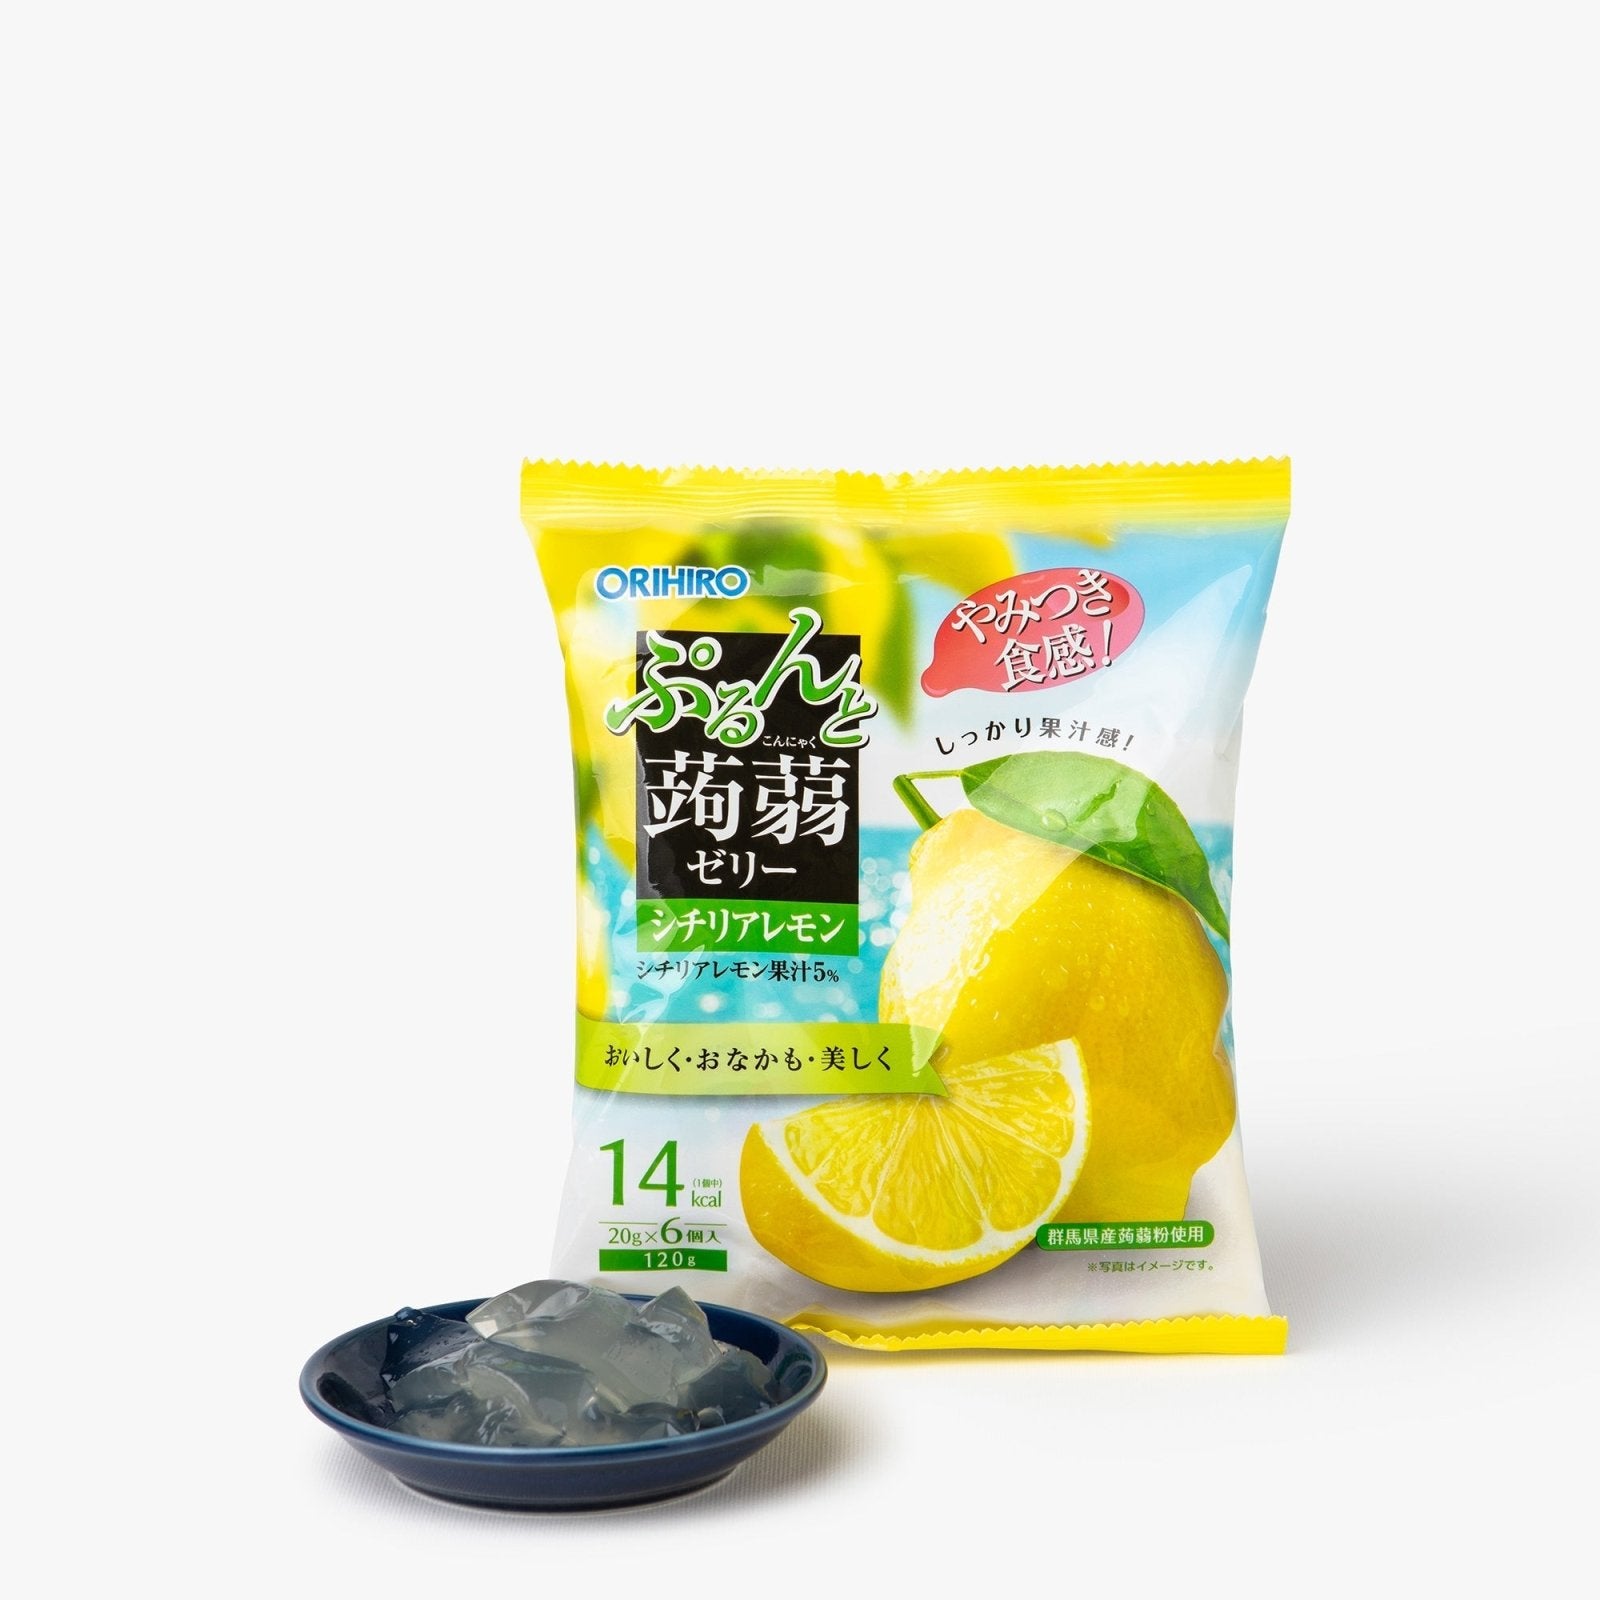 Gelées de konjac au citron - 120g - Orihiro - iRASSHAi